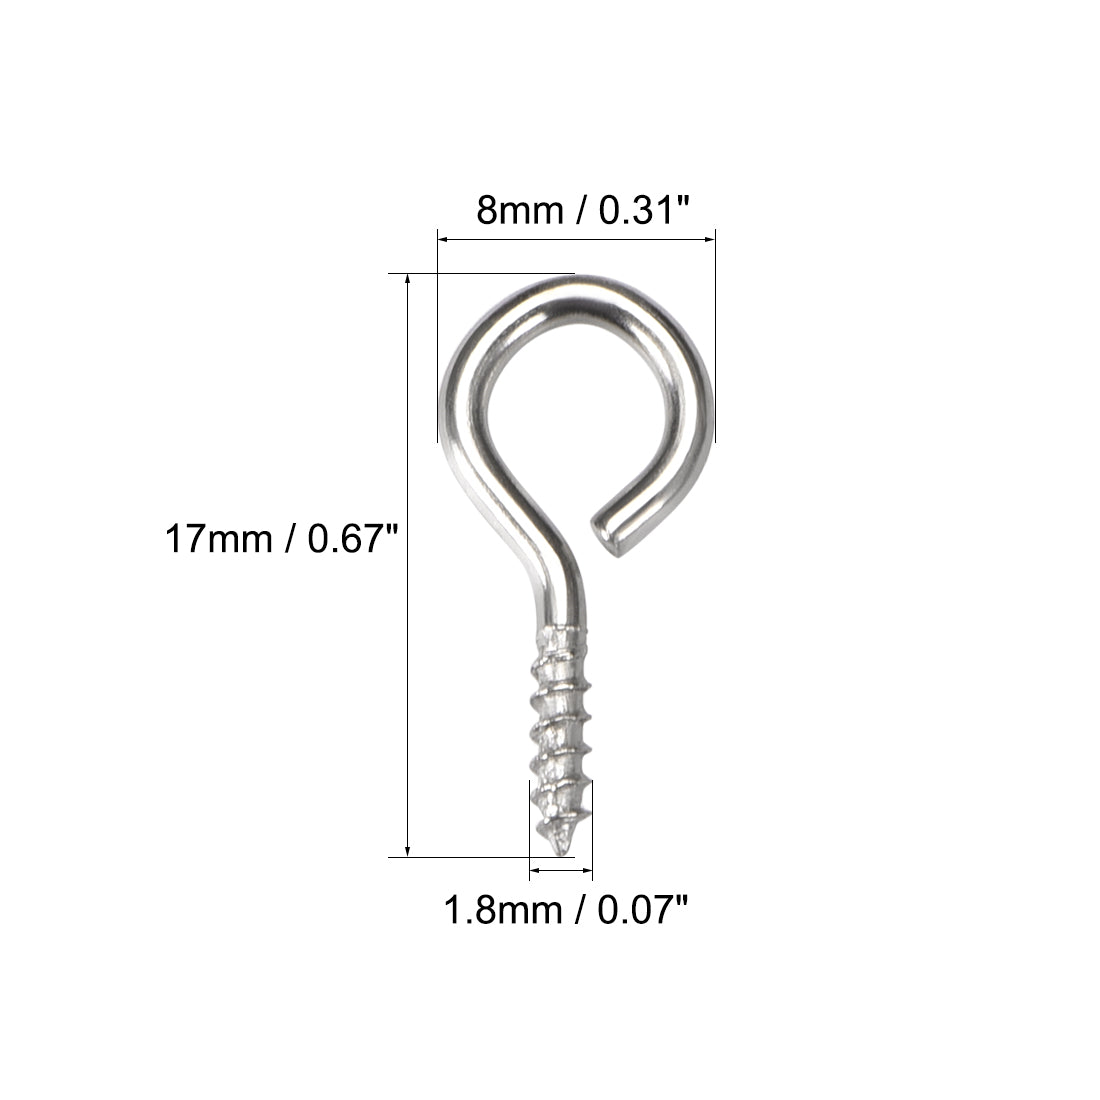 uxcell Uxcell 0.67" Small Screw Eye Hooks Self Tapping Screws Carbon Steel Screw-in Hanger Eye-Shape Ring Hooks Silver 100pcs